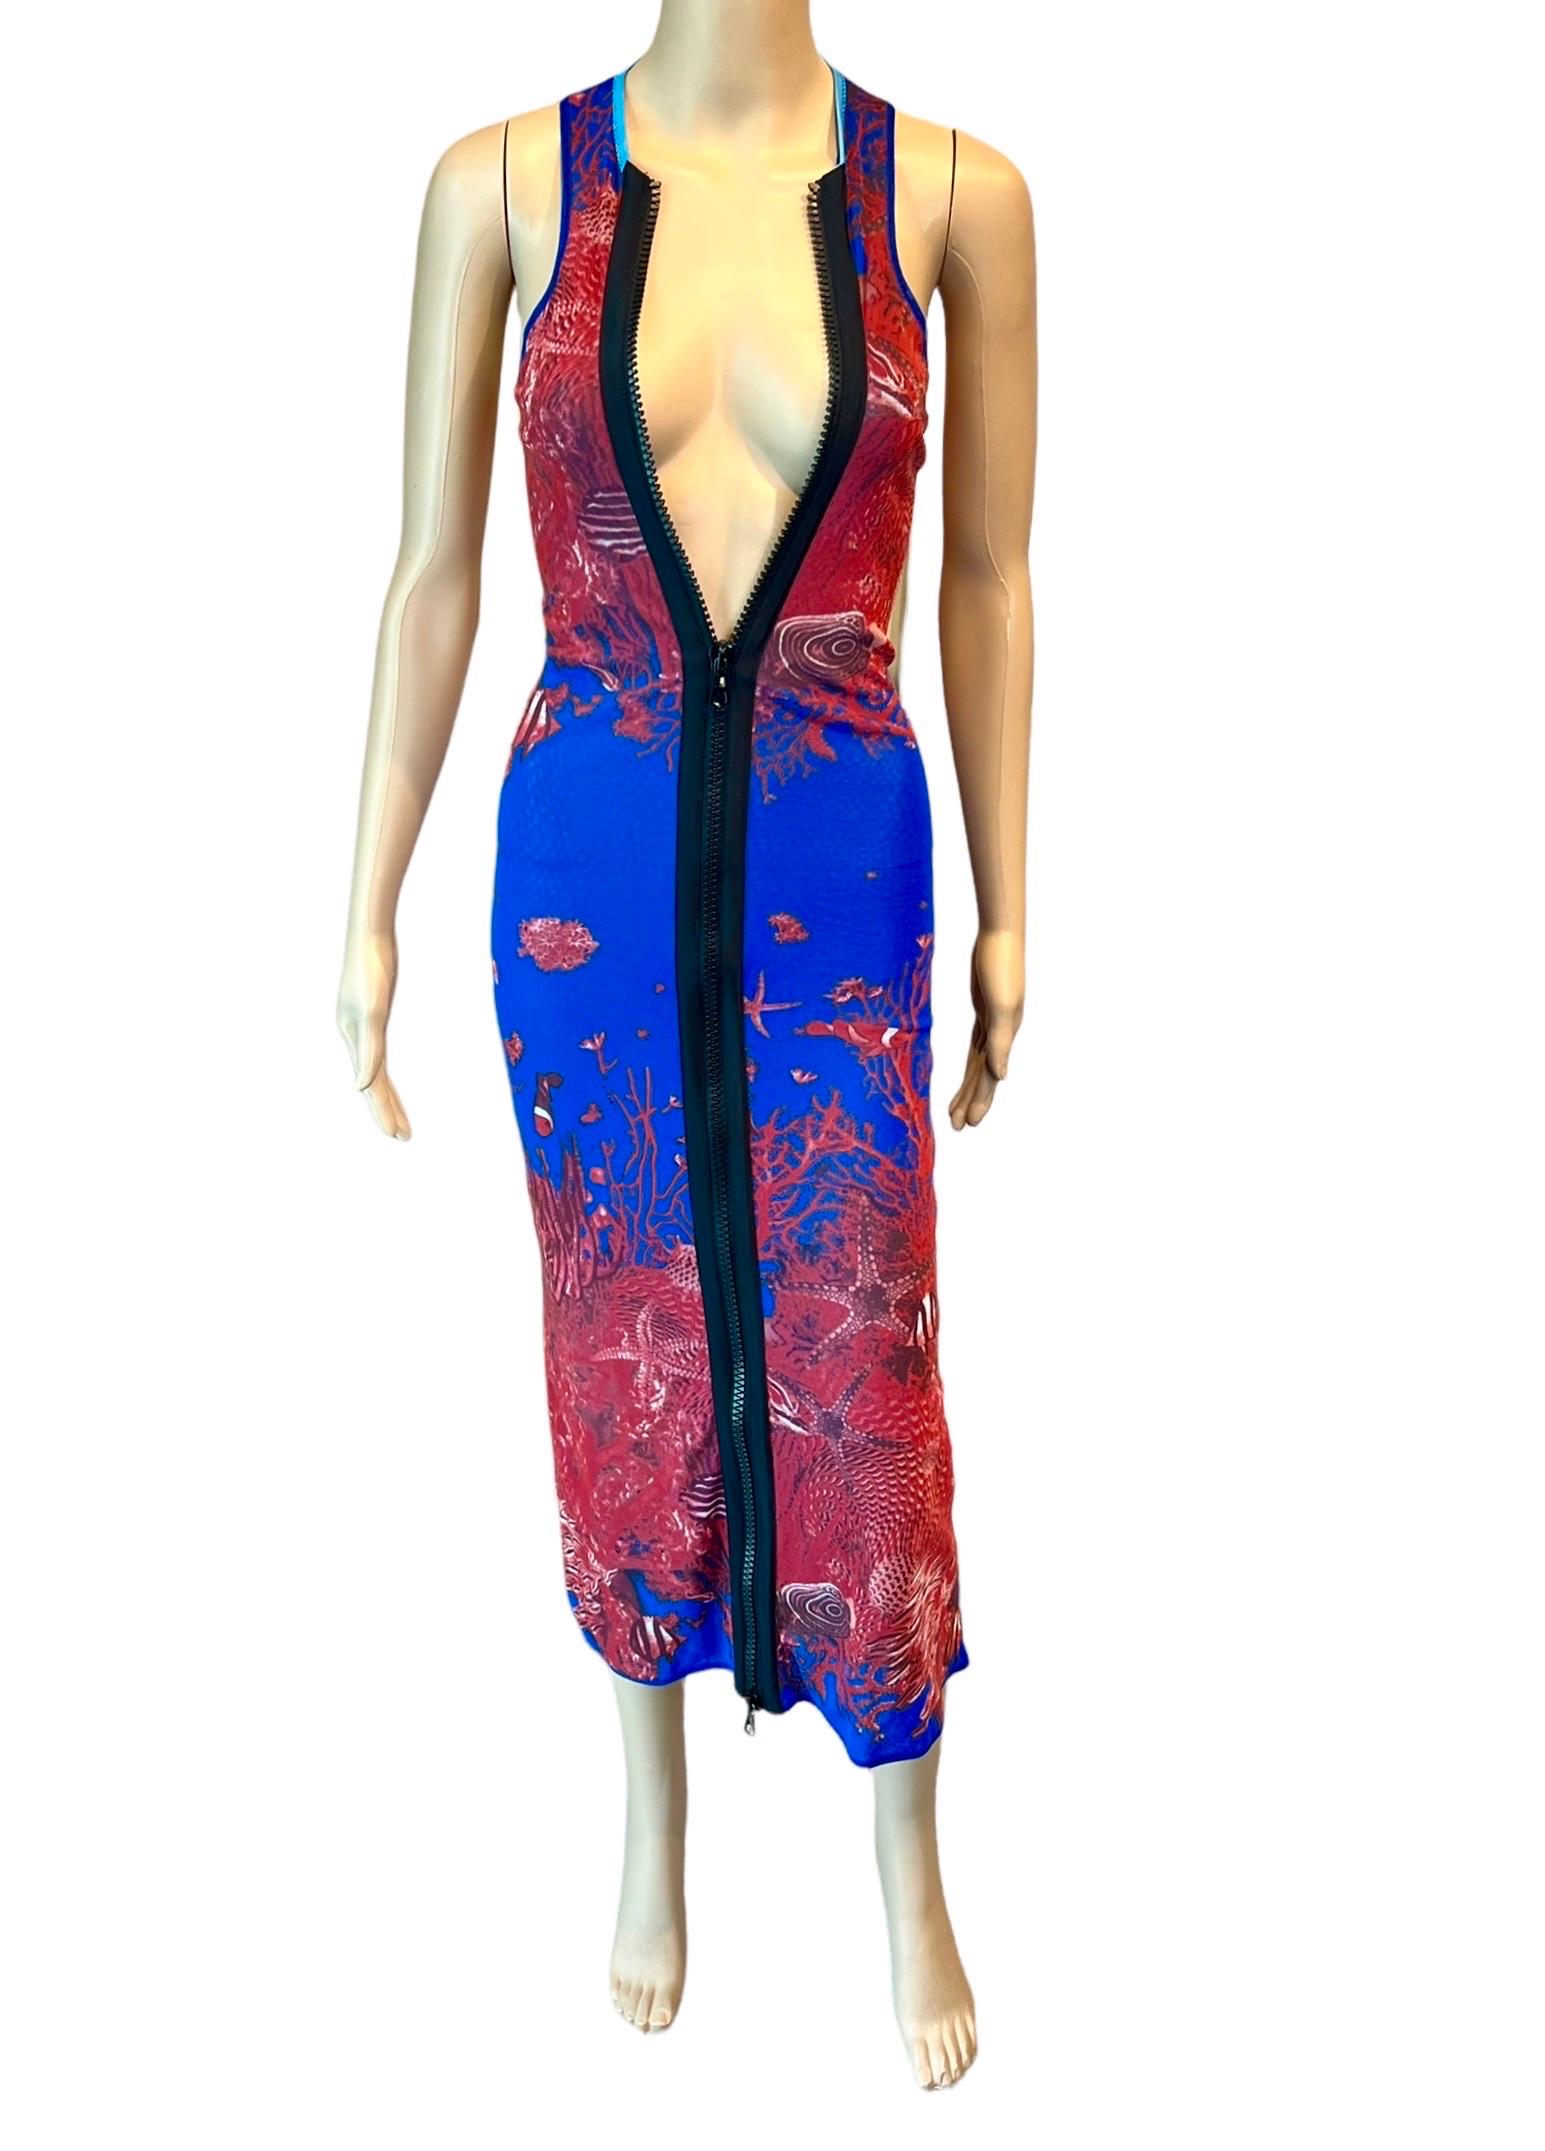 Jean Paul Gaultier Soleil S/S 1999 Sea Life Print Bodycon Zipper Mesh Maxi Dress 6